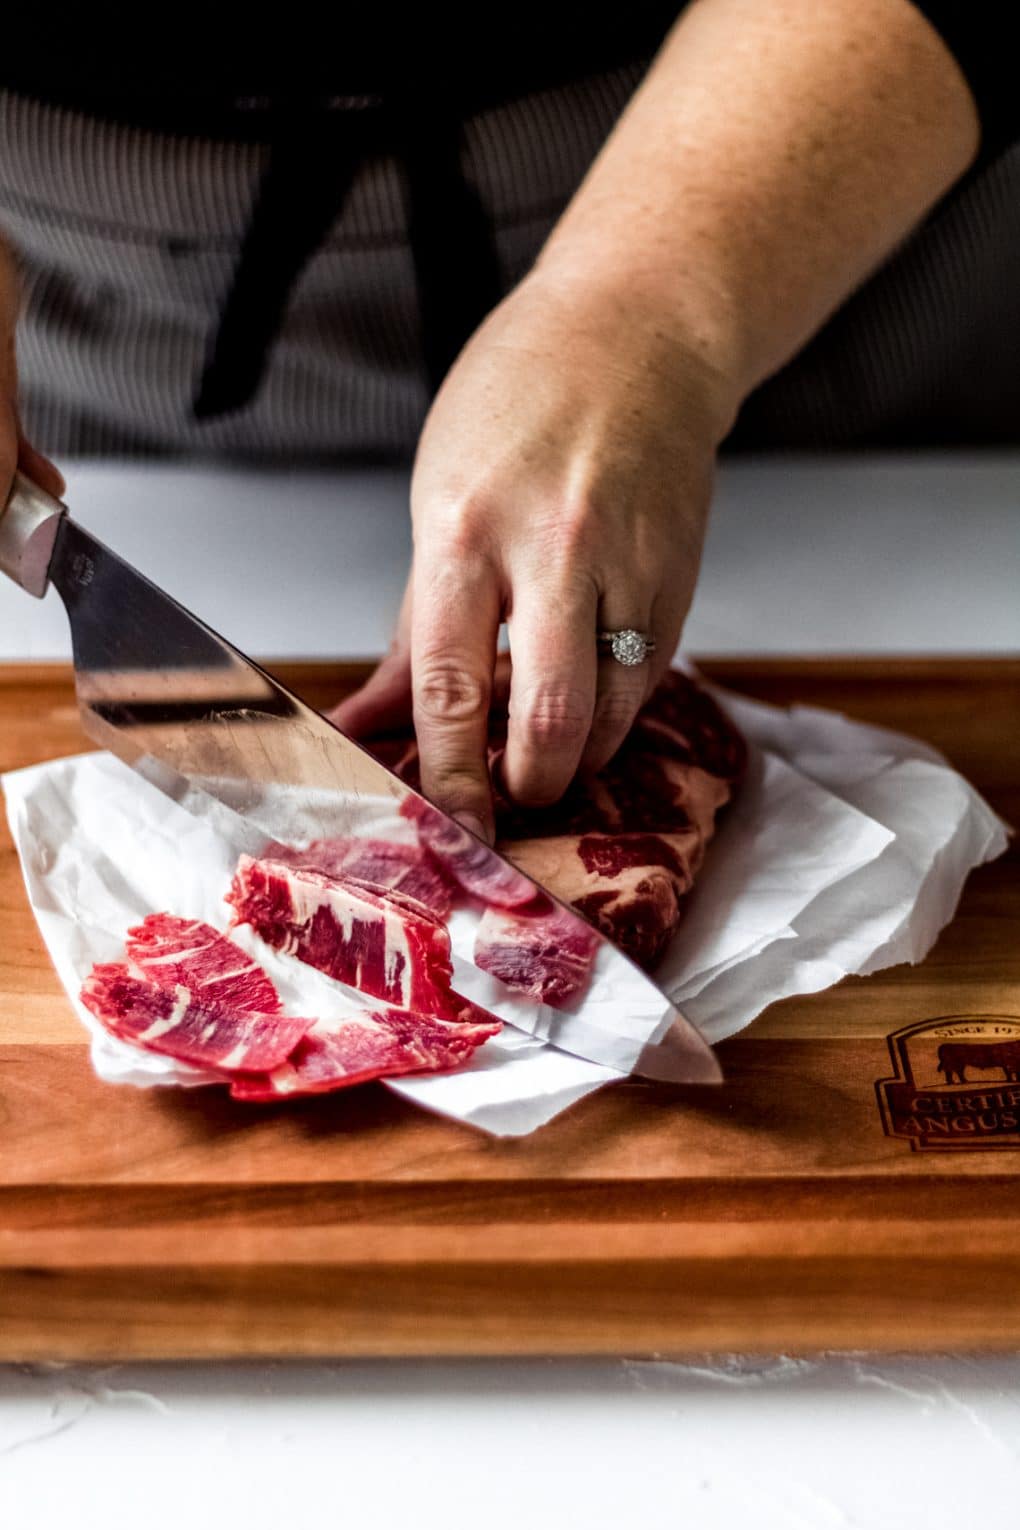 a woman slicing a certified angus beef ribeye steak